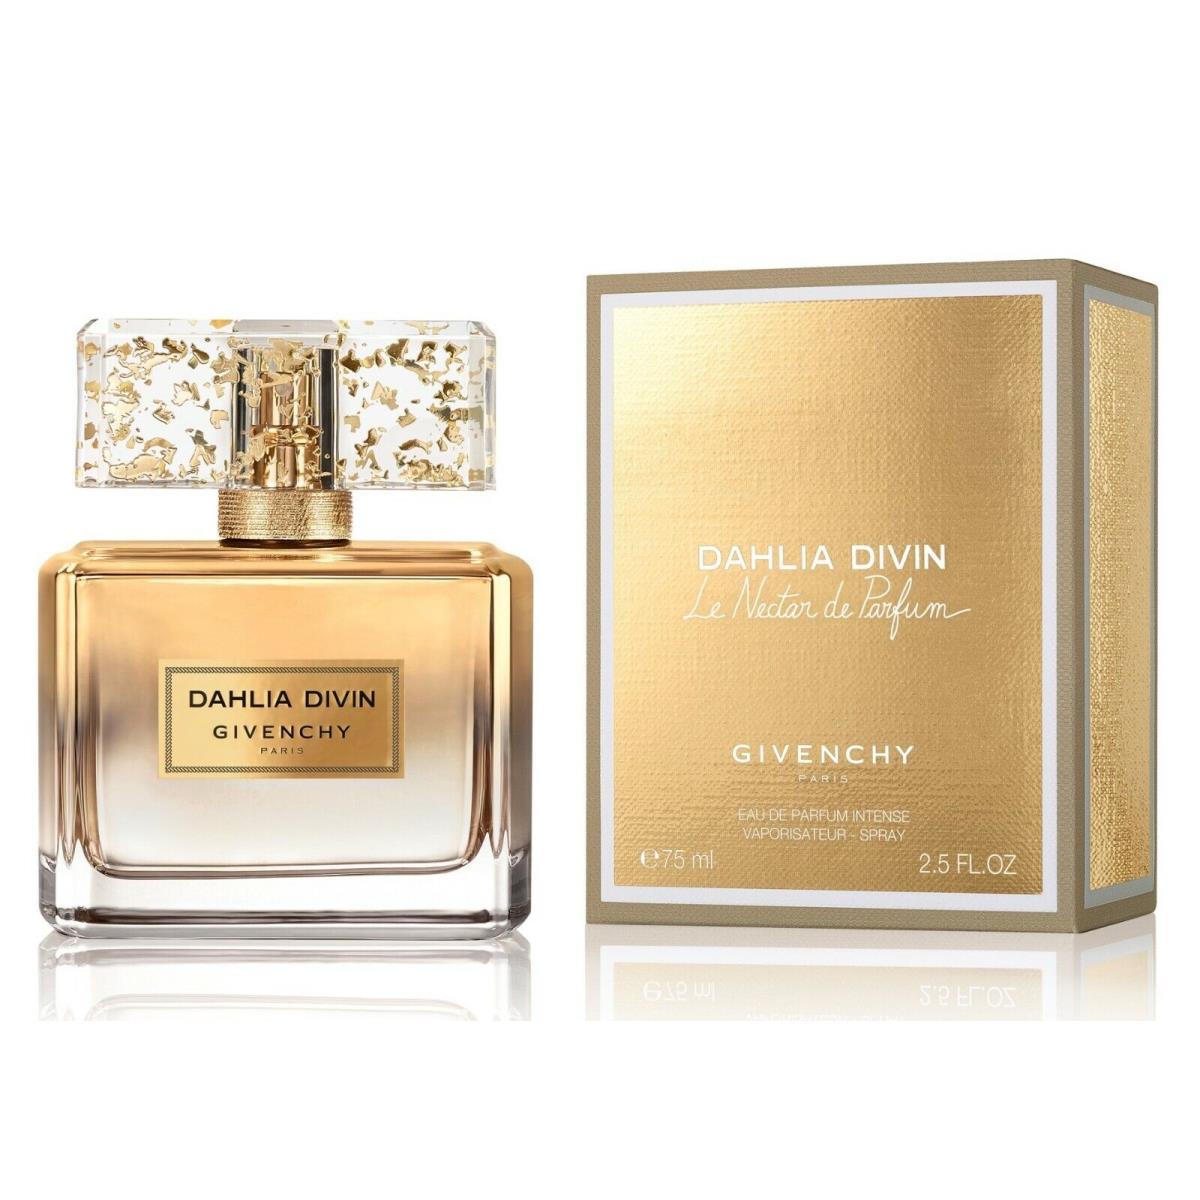 Dahlia Divin Le Nectar de Parfum by Givenchy 2.5 Fl oz Edp Spray For Women